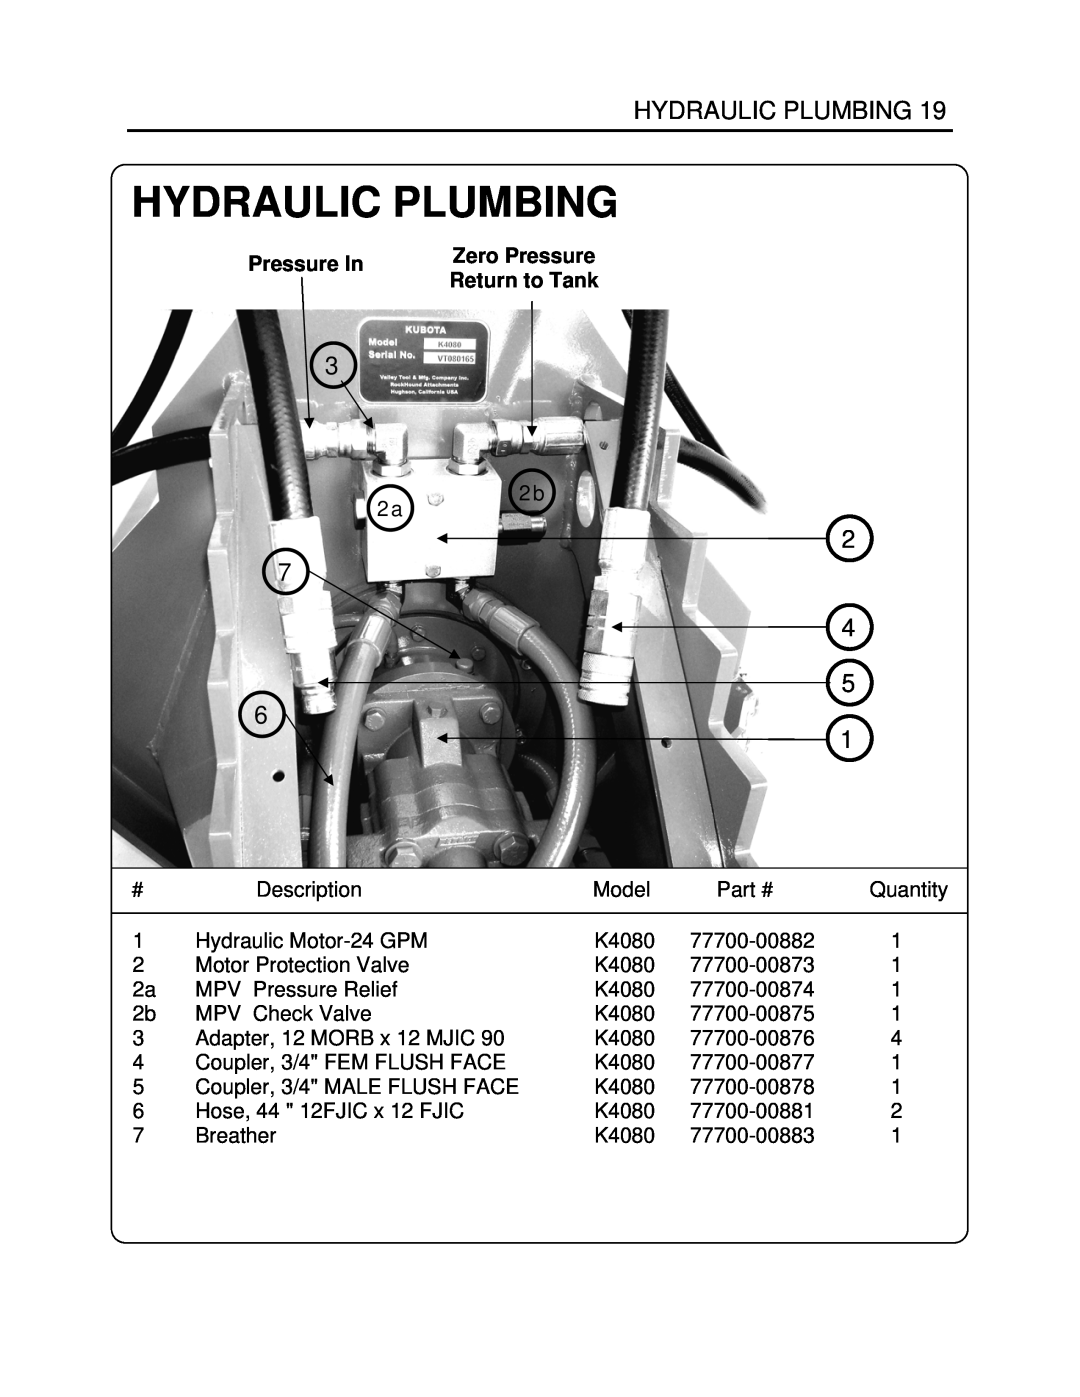 Generac Power Systems K4080 manual Hydraulic Plumbing 